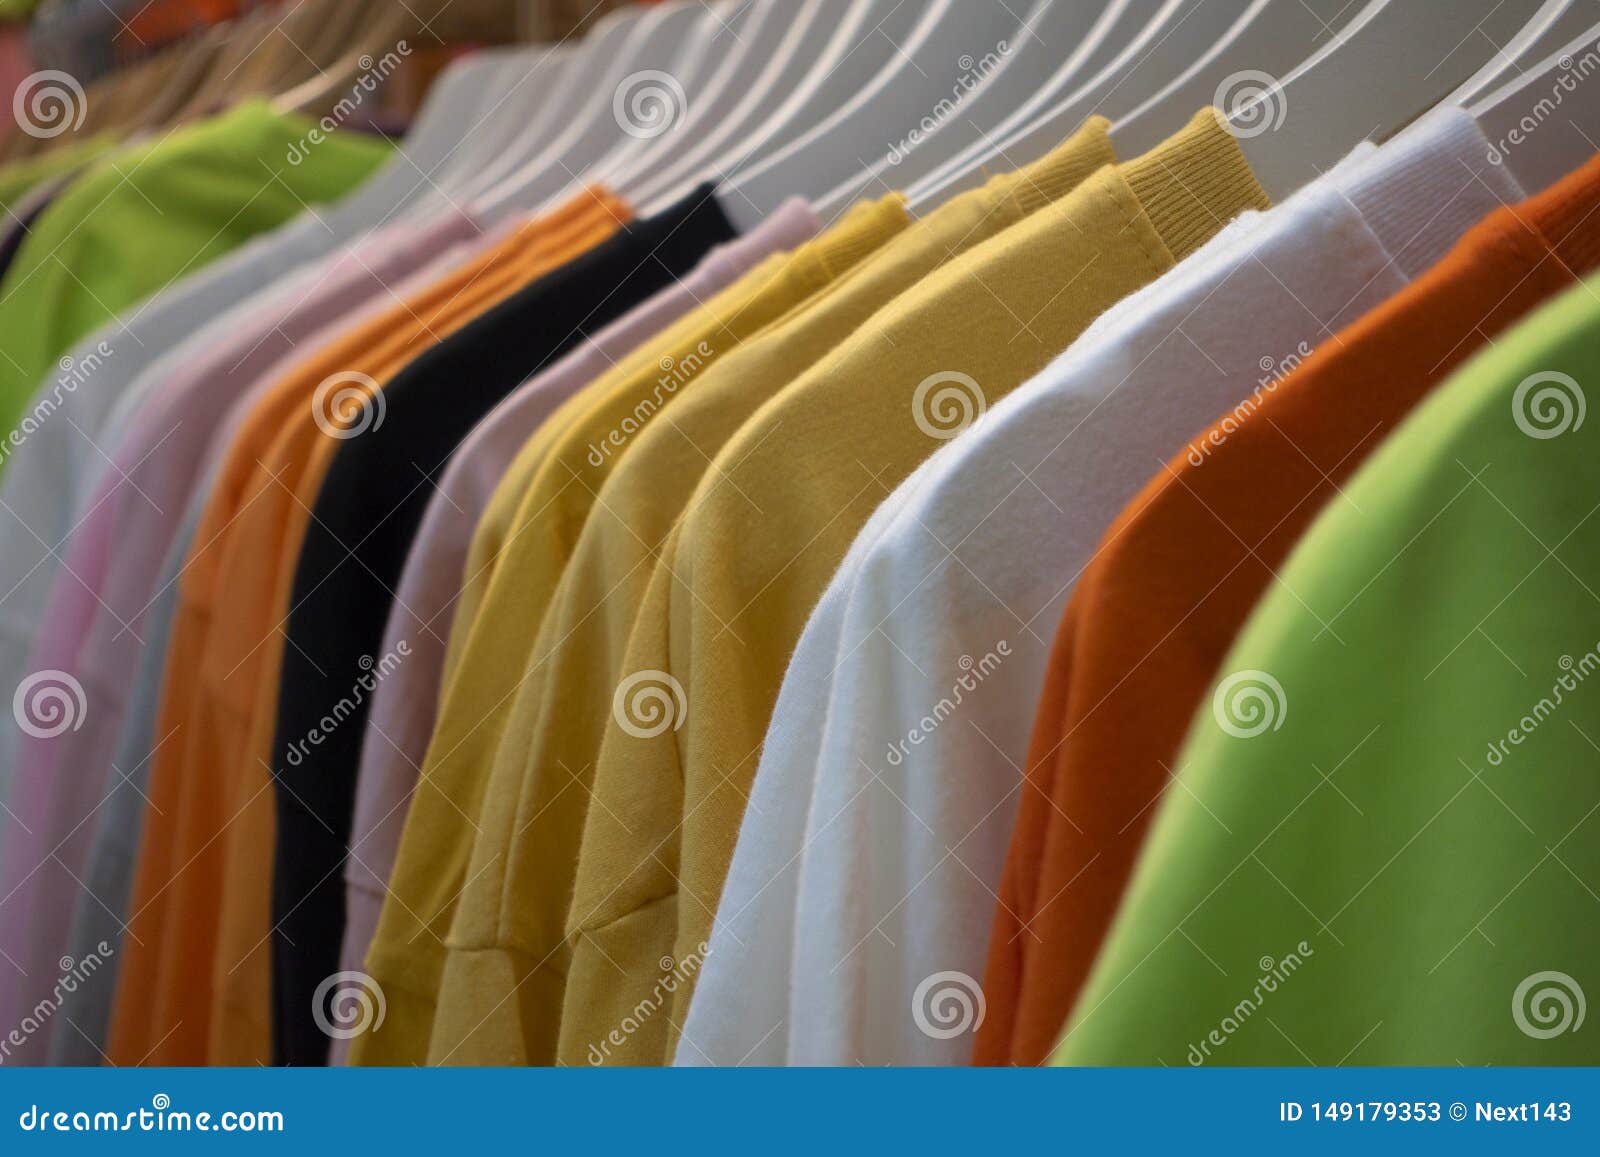 The Multi Colours Plain T-shirt Including Yellow Colour Stock Image ...